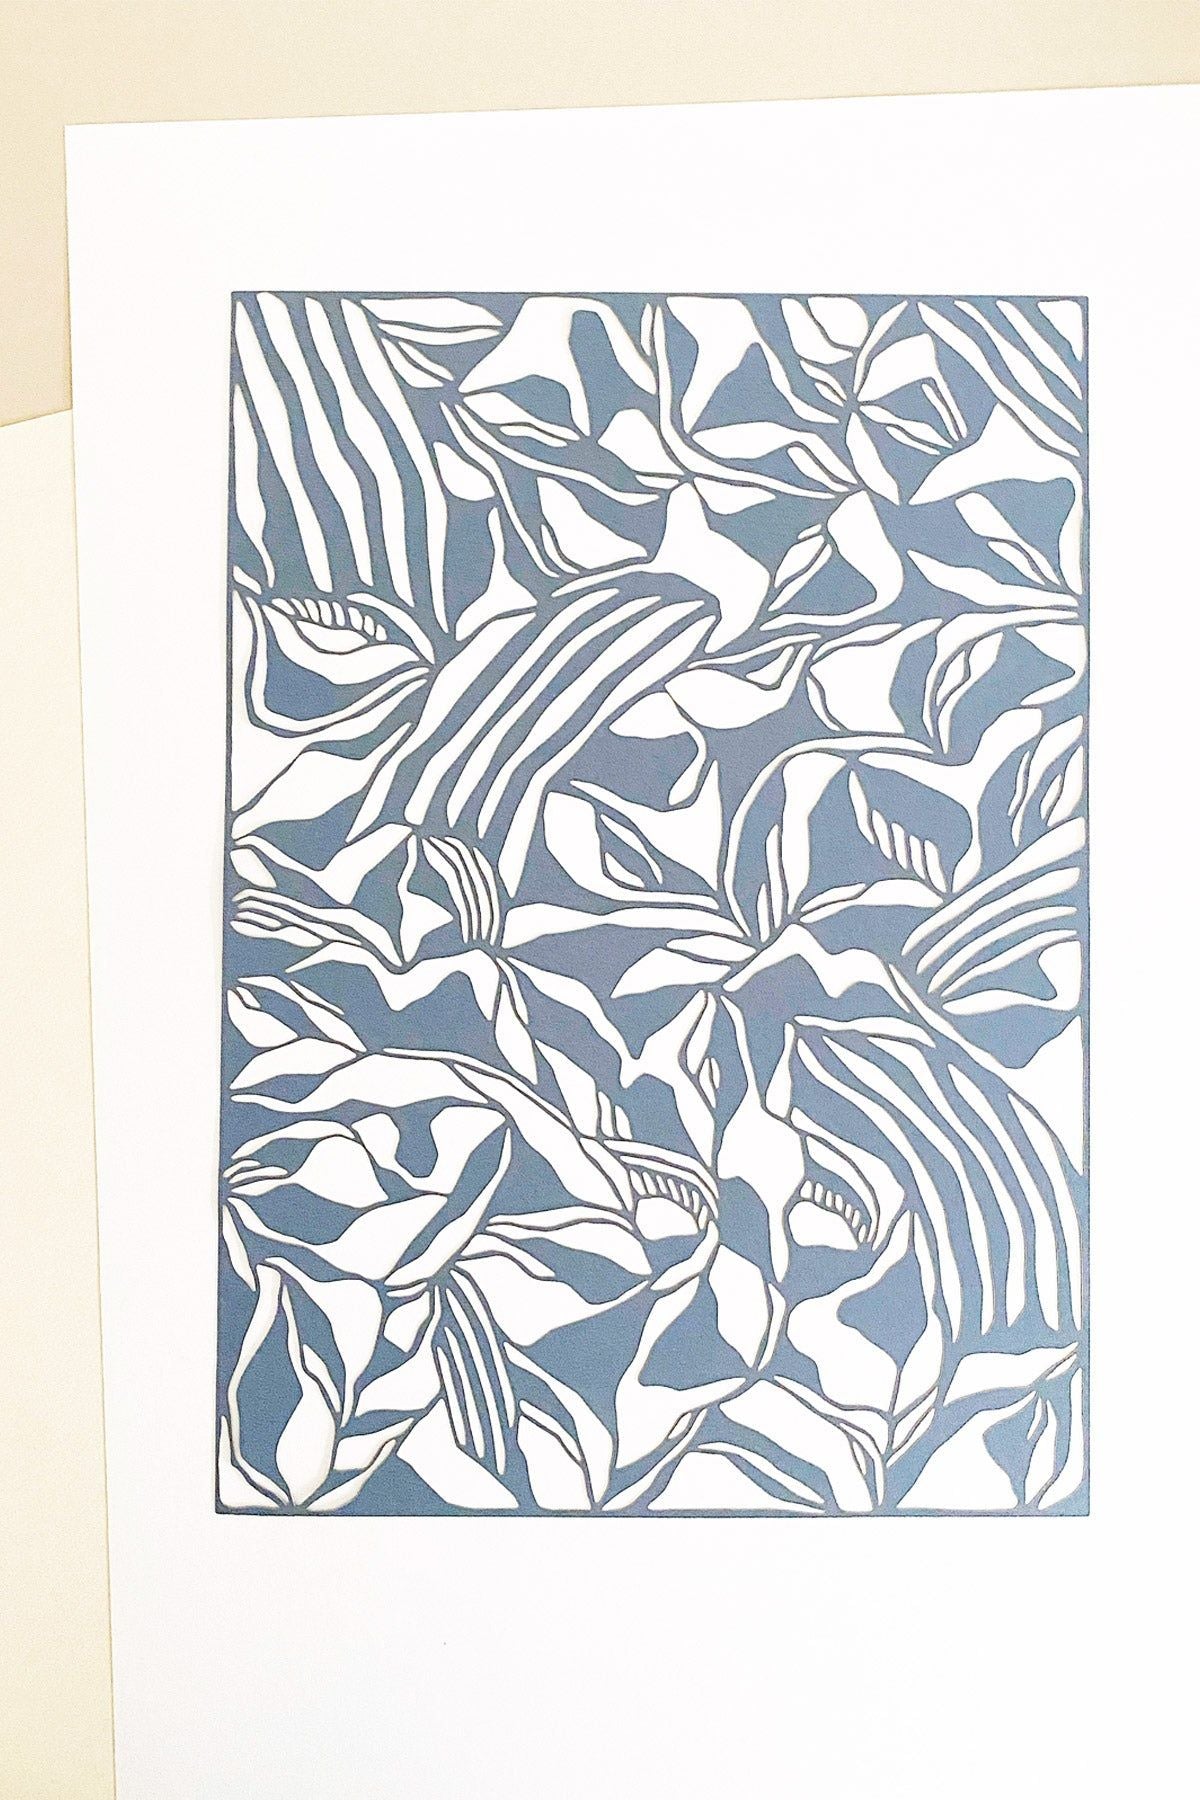 Studio sur Papercut A3 Rectangle organique, bleu en acier